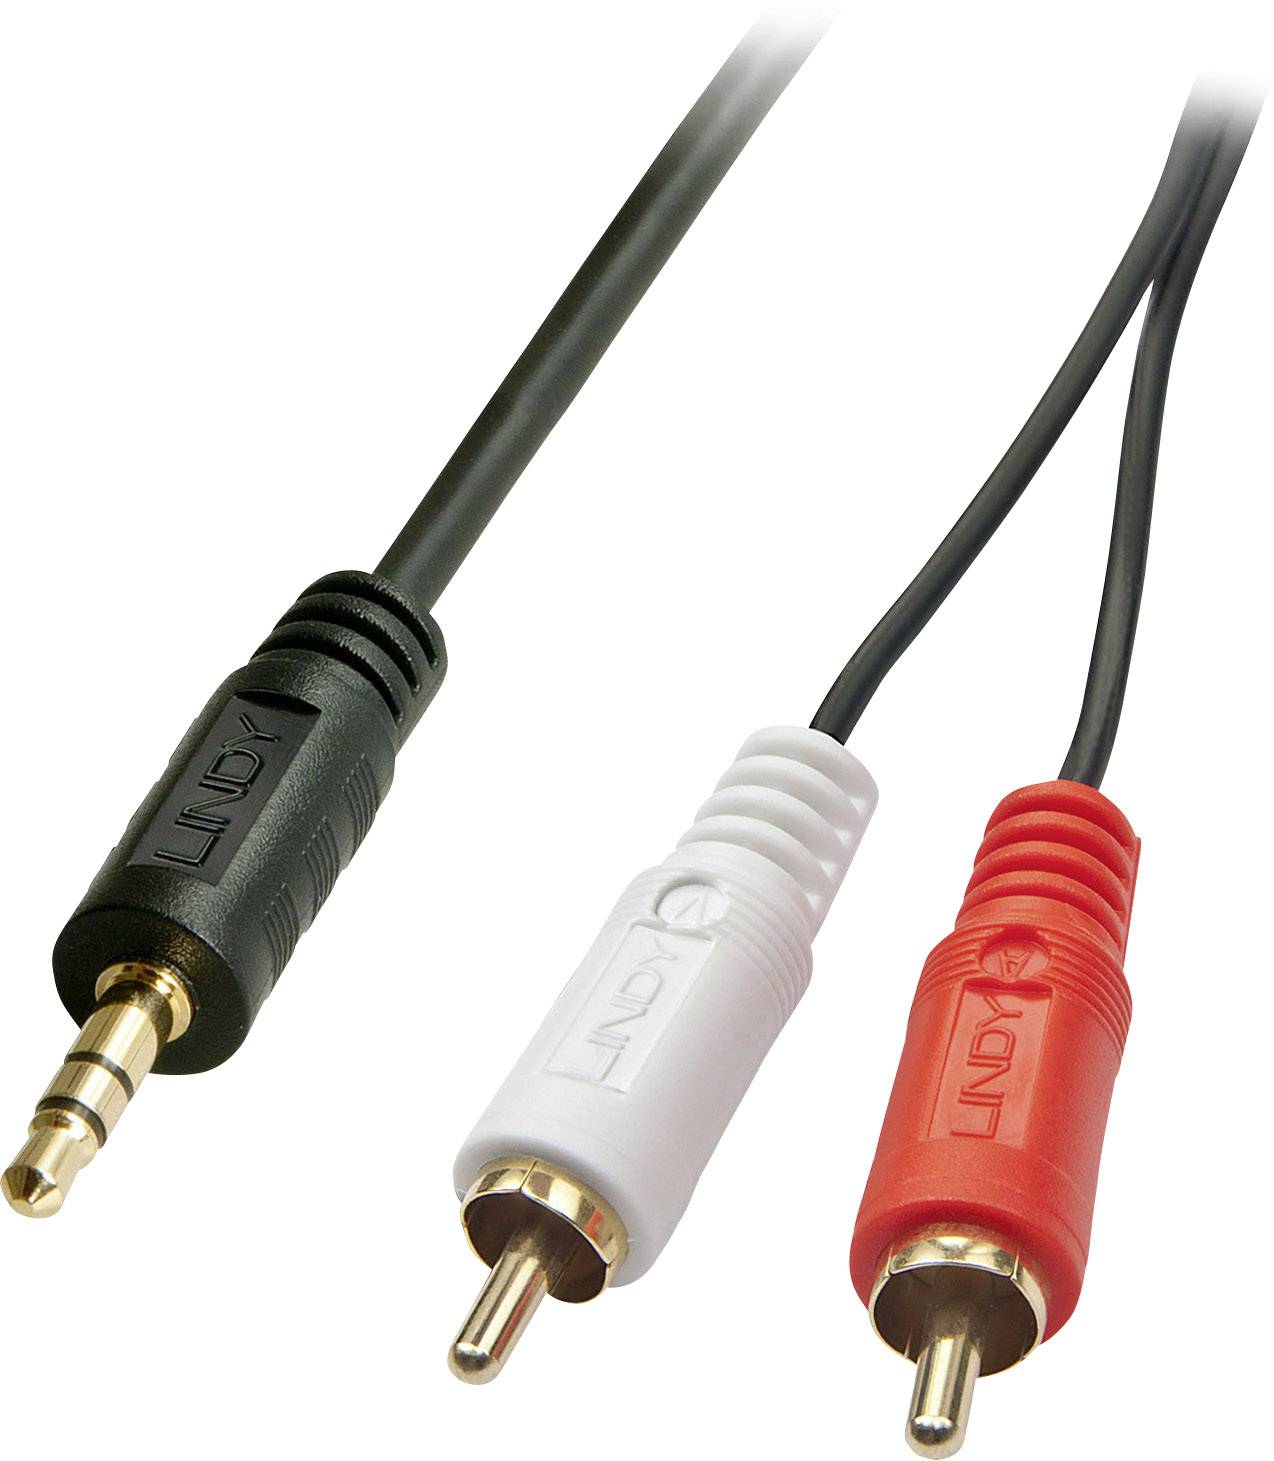 LINDY Audiokabel Stereo RCA 3,5mm/5m  2xRCA/3,5mm m/m, vergoldet